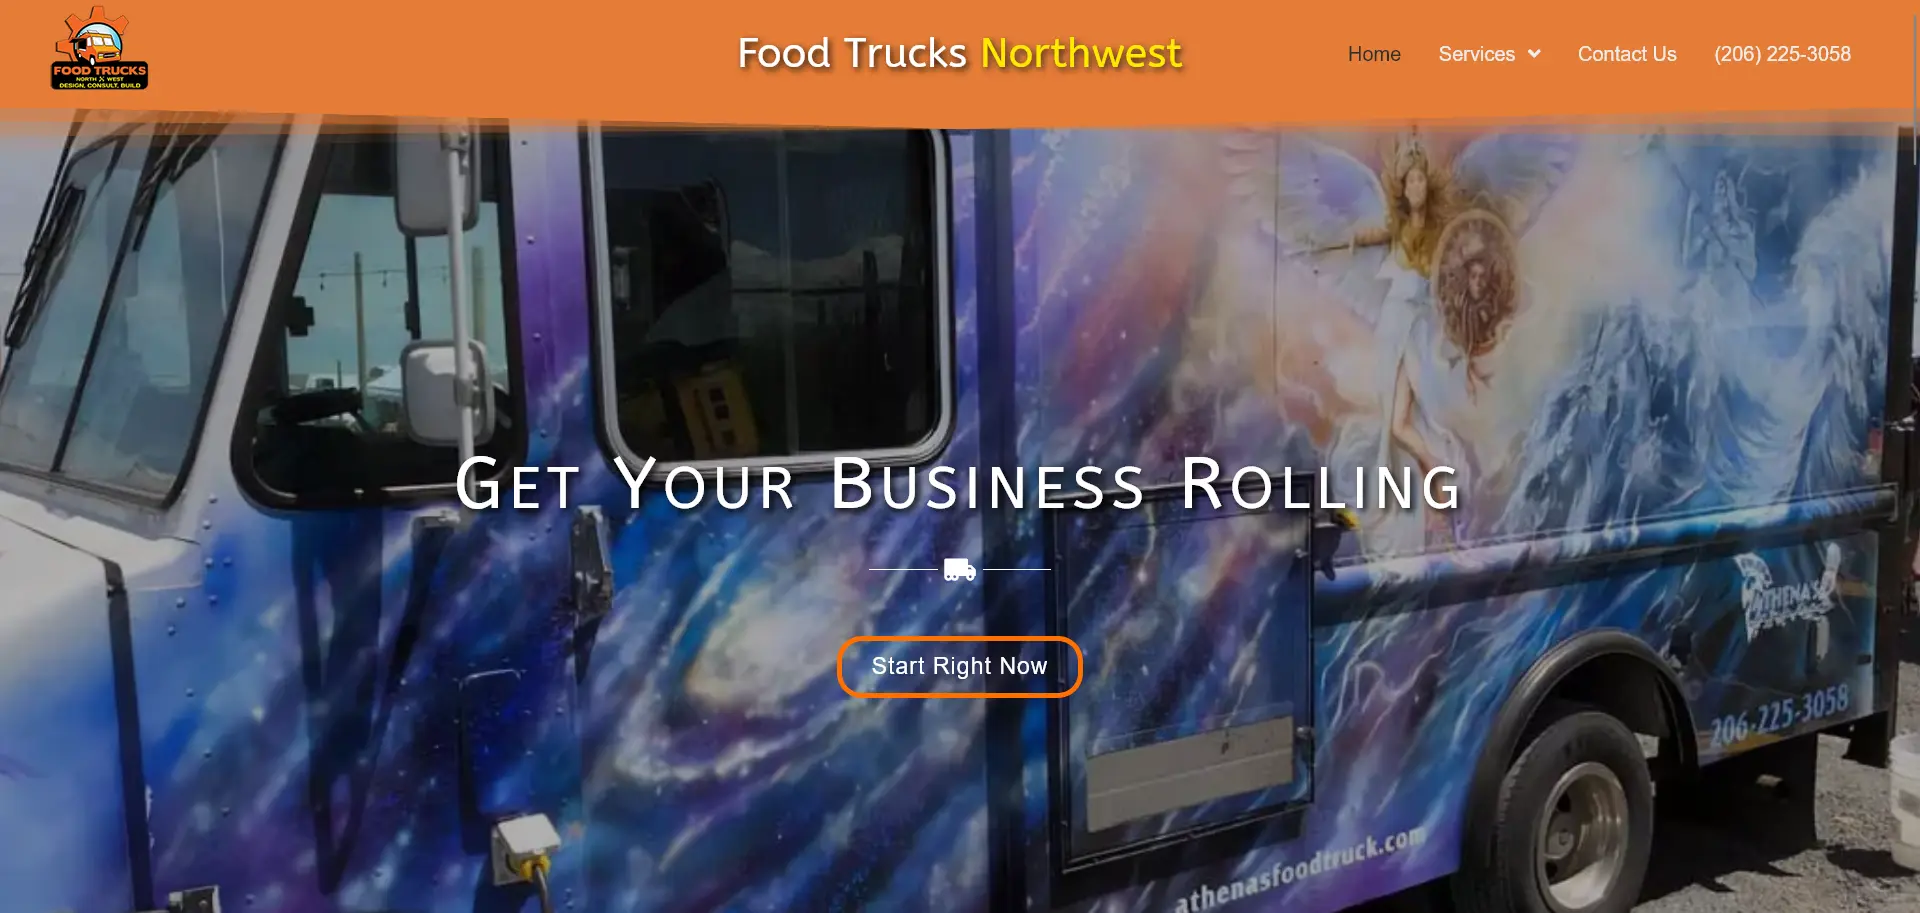 The website for Food Trucks Northwest.